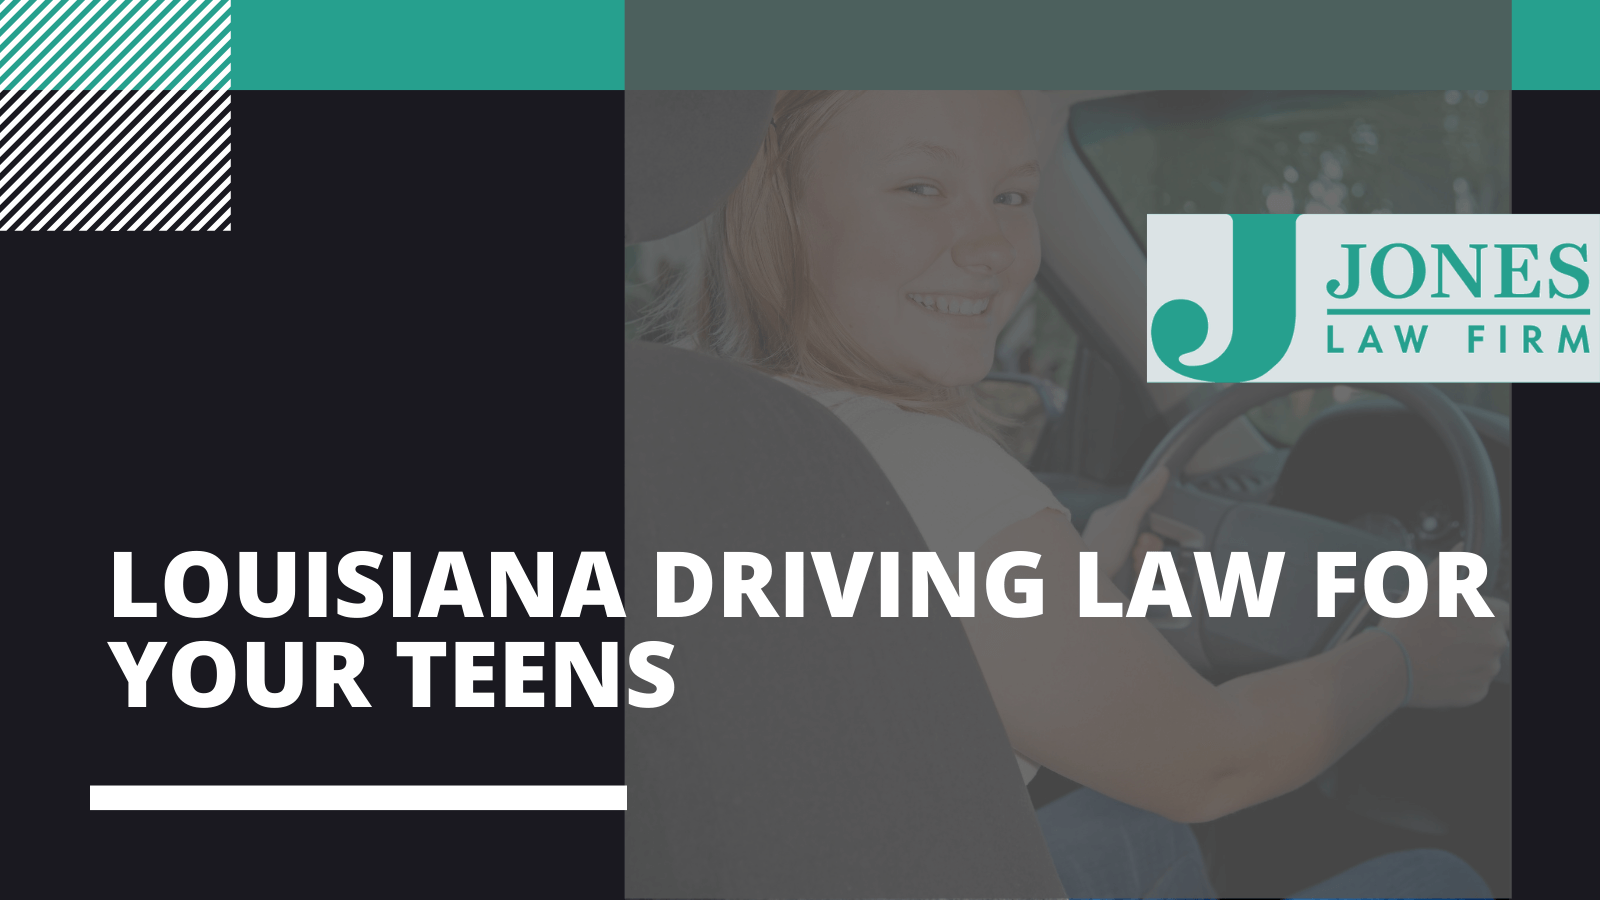 Louisiana Driving Law for your Teens - Jones law firm - Alexandria louisiana